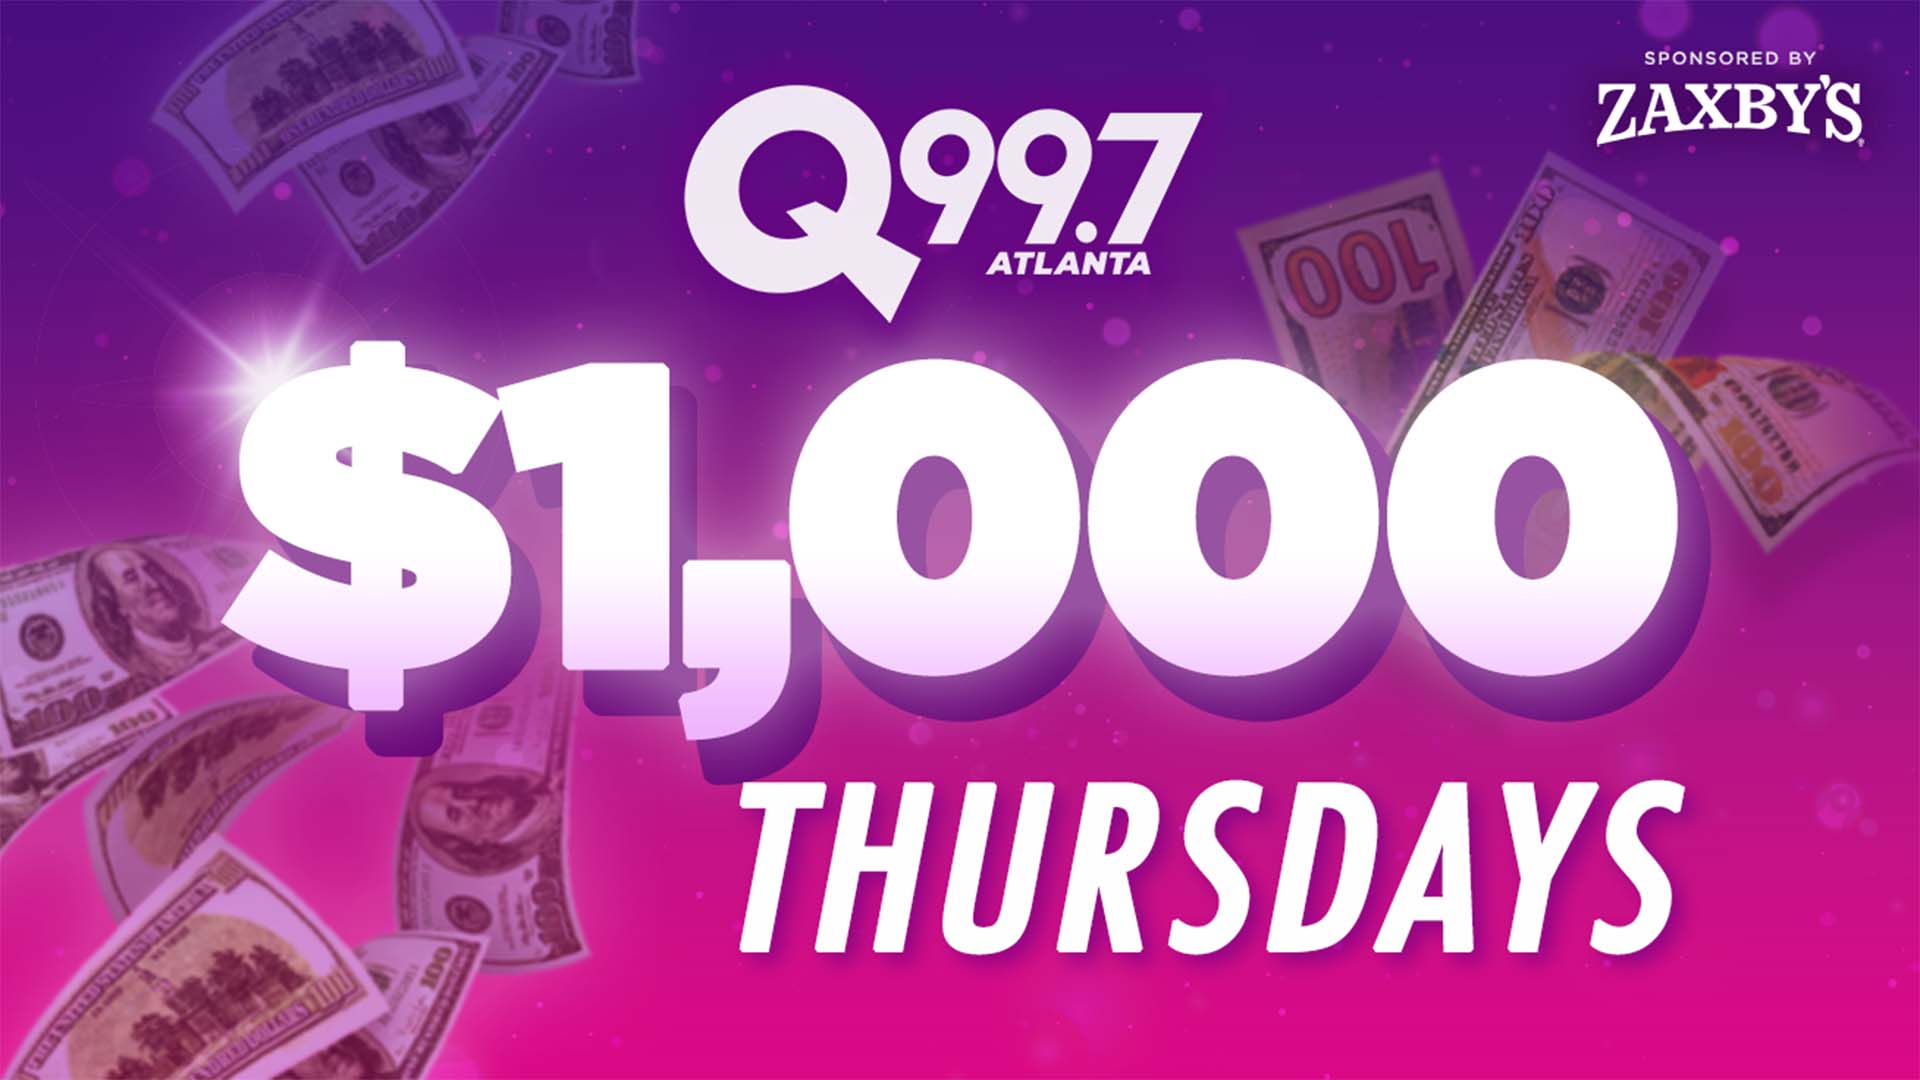 Q99.7 $1,000 Thursdays